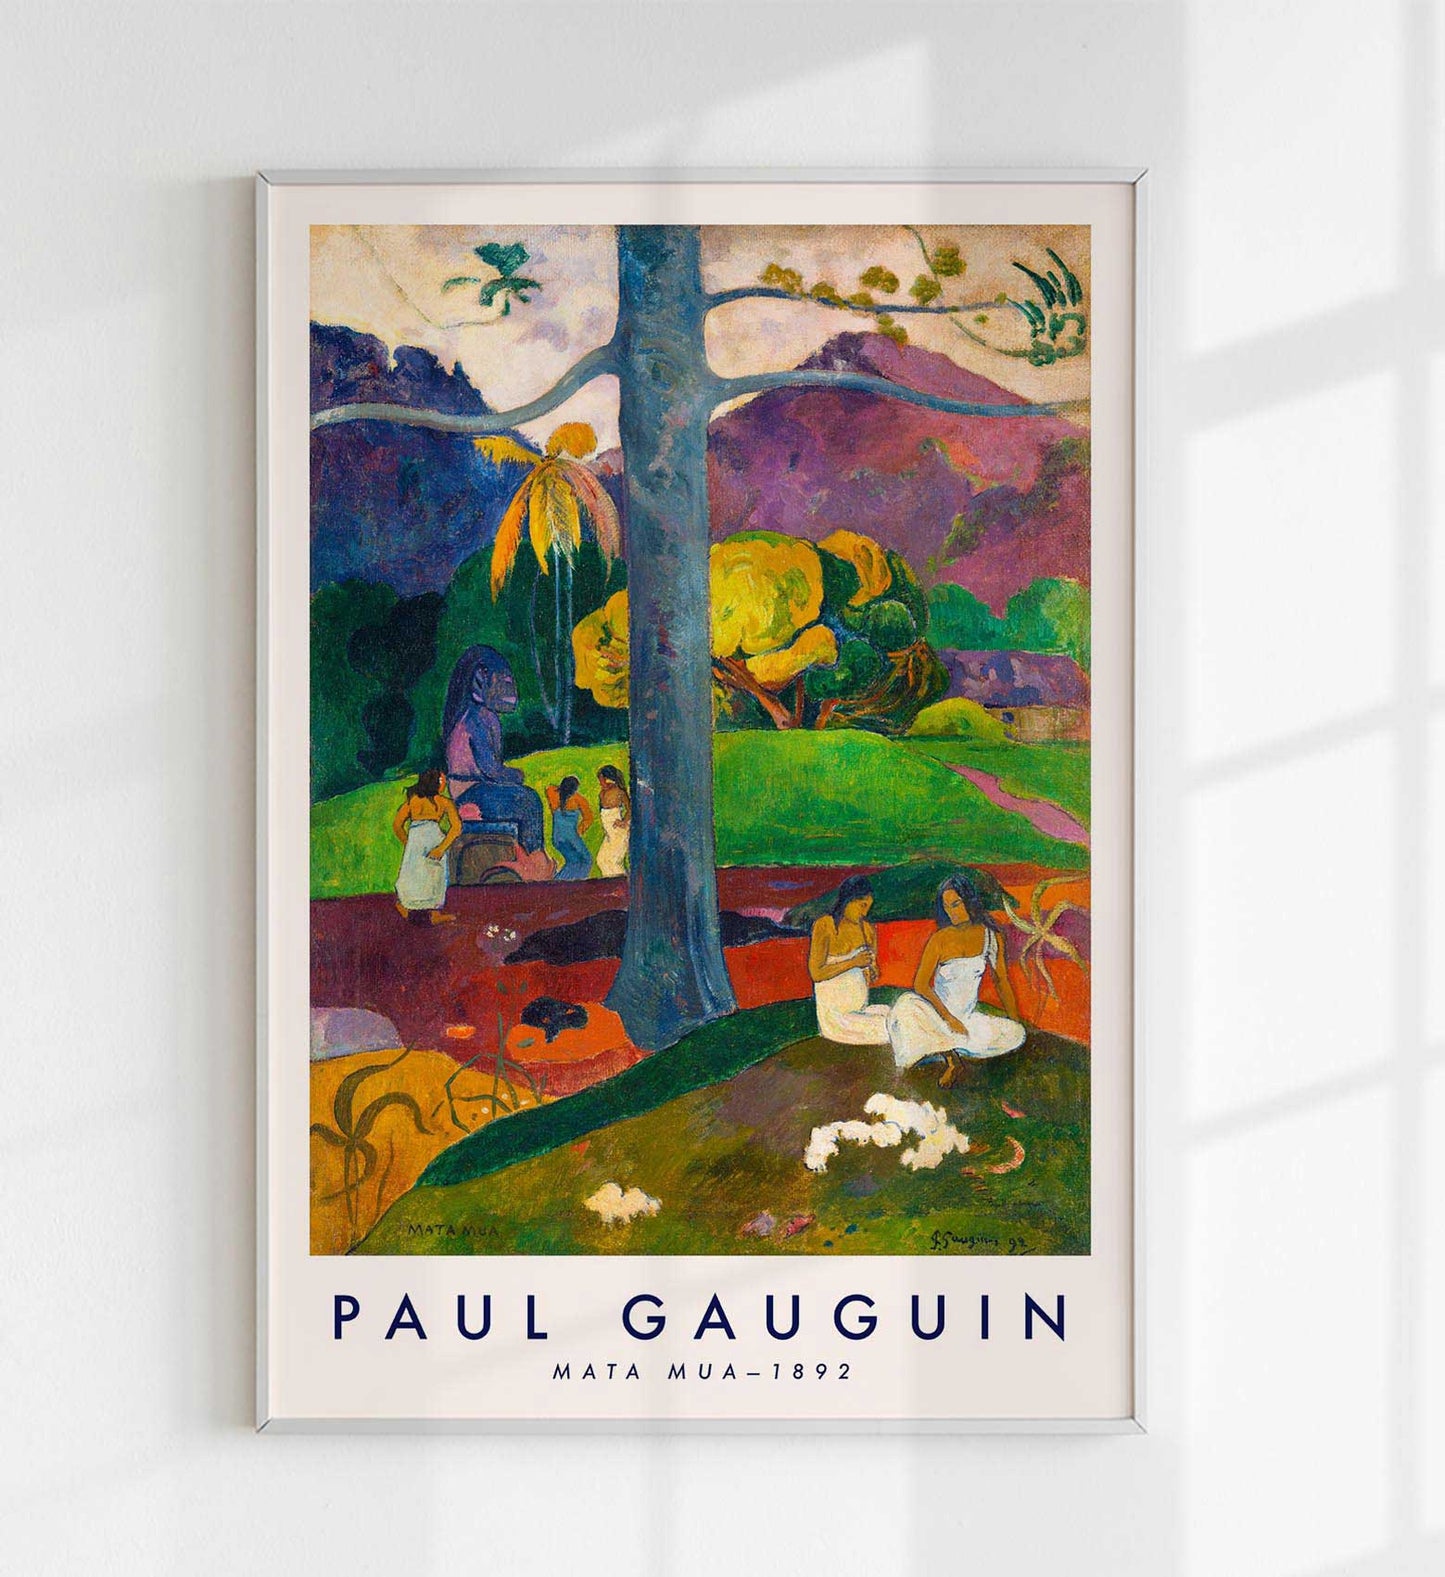 Mata Mua by Paul Gauguin